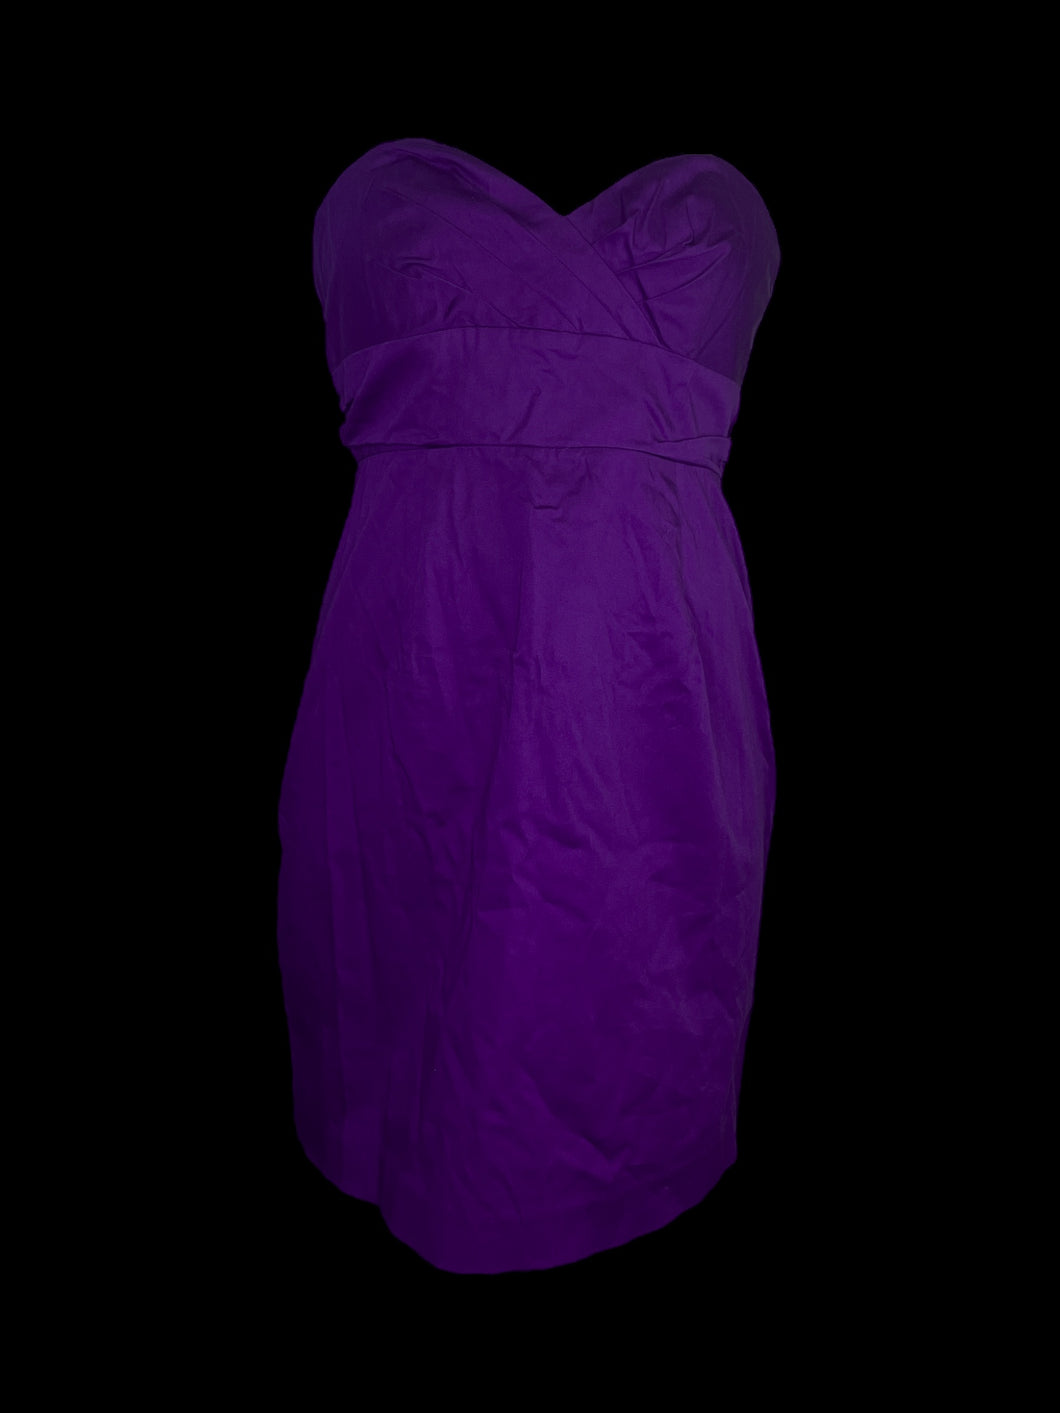 S Royal purple strapless dress w/ sweetheart neckline, pleating on chest, & back zipper closure